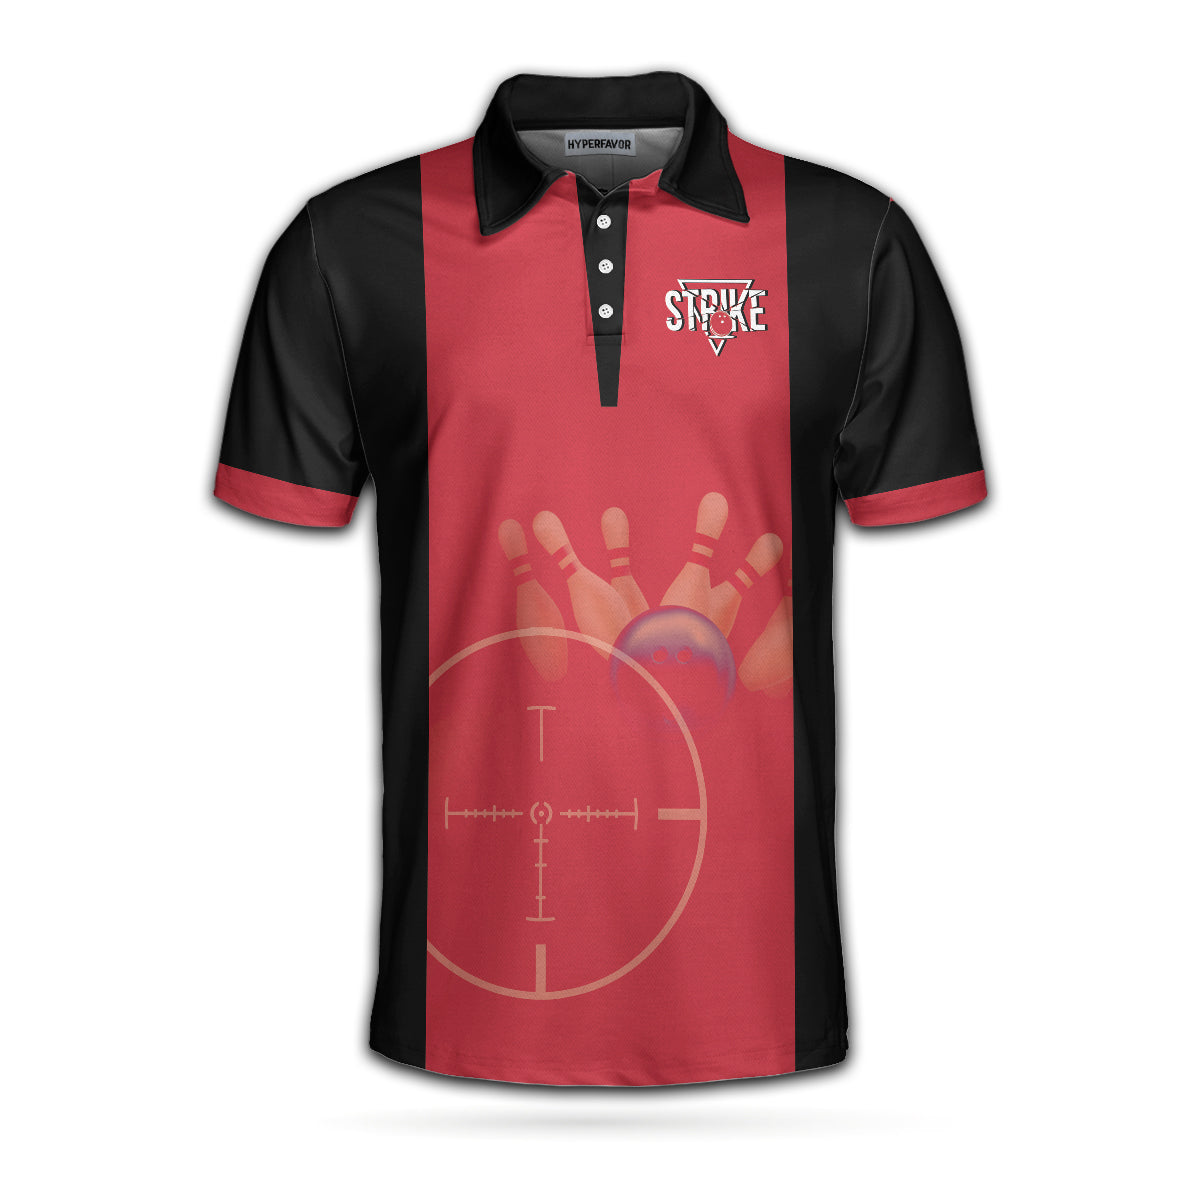 Kinda Busy Right Now Bowling Polo Shirt/ Black And Red Polo Style Bowling Shirt/ Funny Bowling Sayings Shirt Coolspod